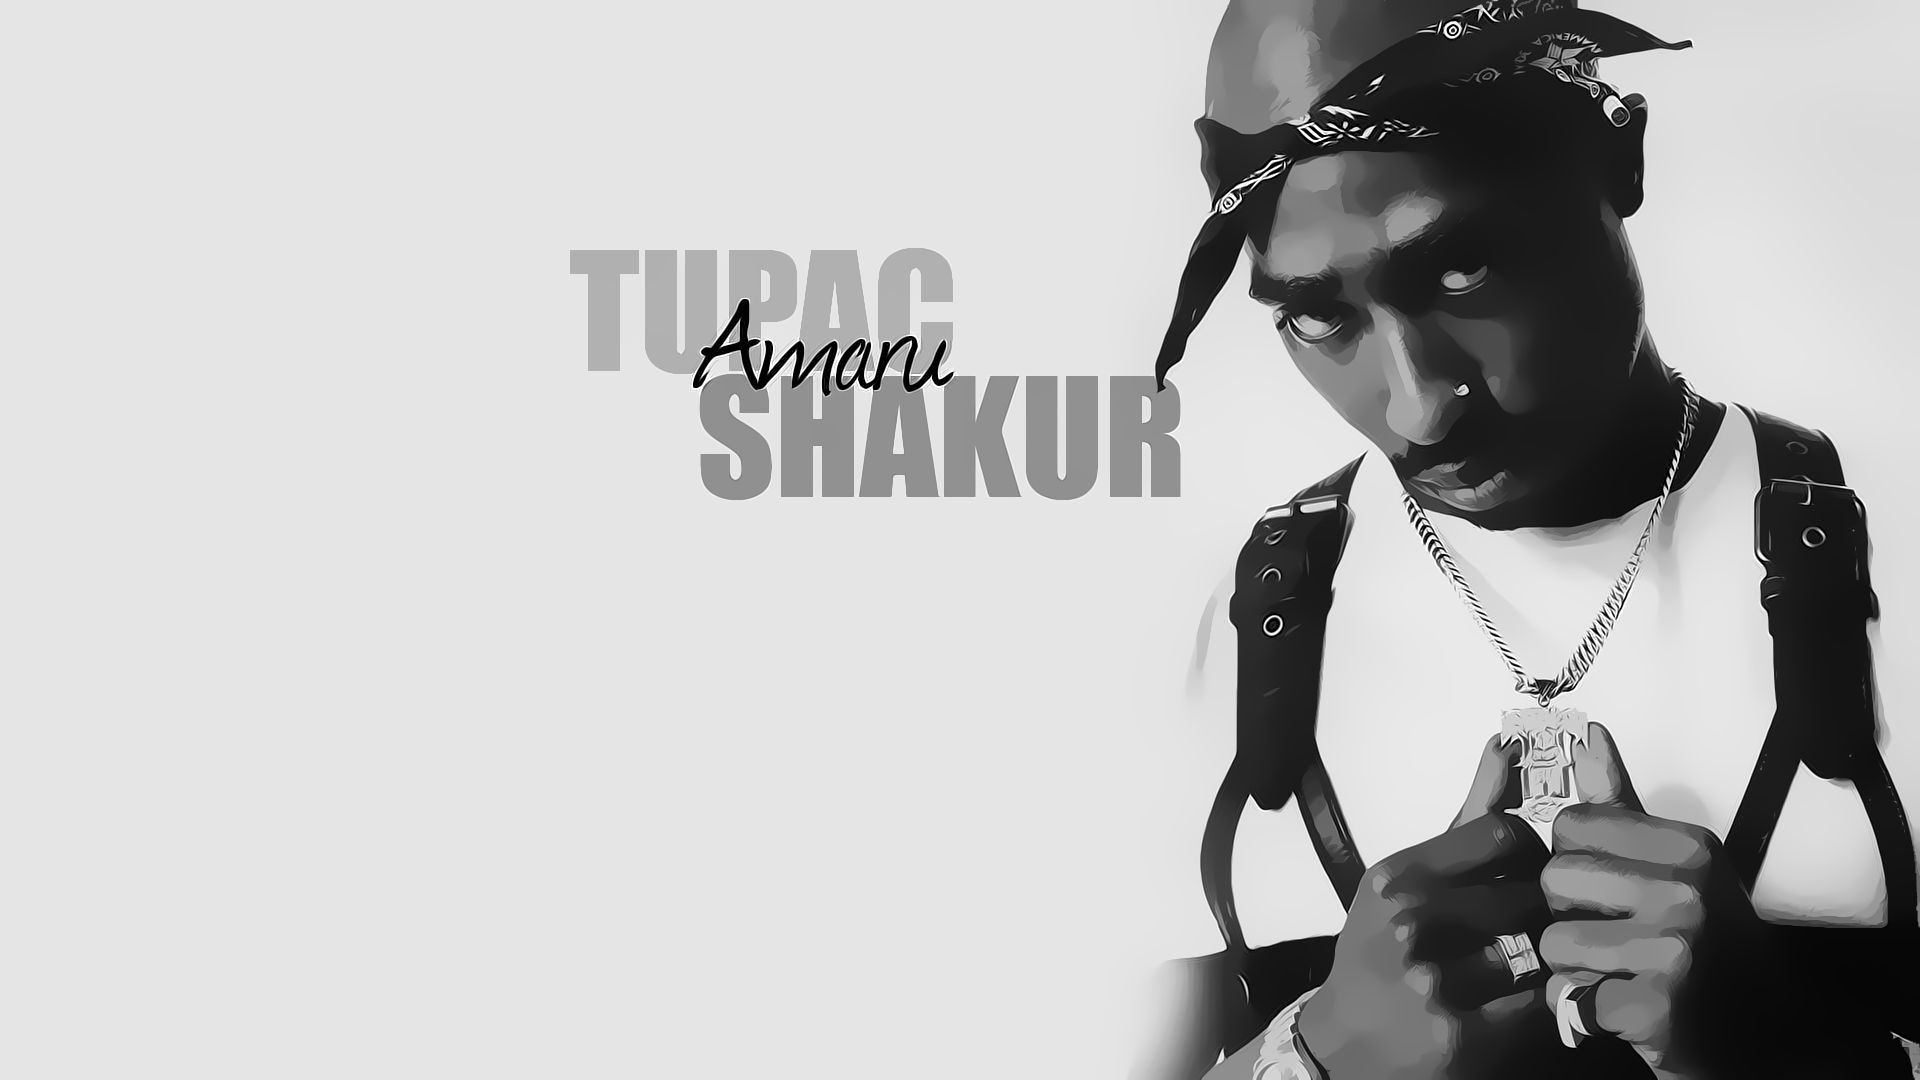 Download Golden 2pac Tupac Shakur Wallpaper